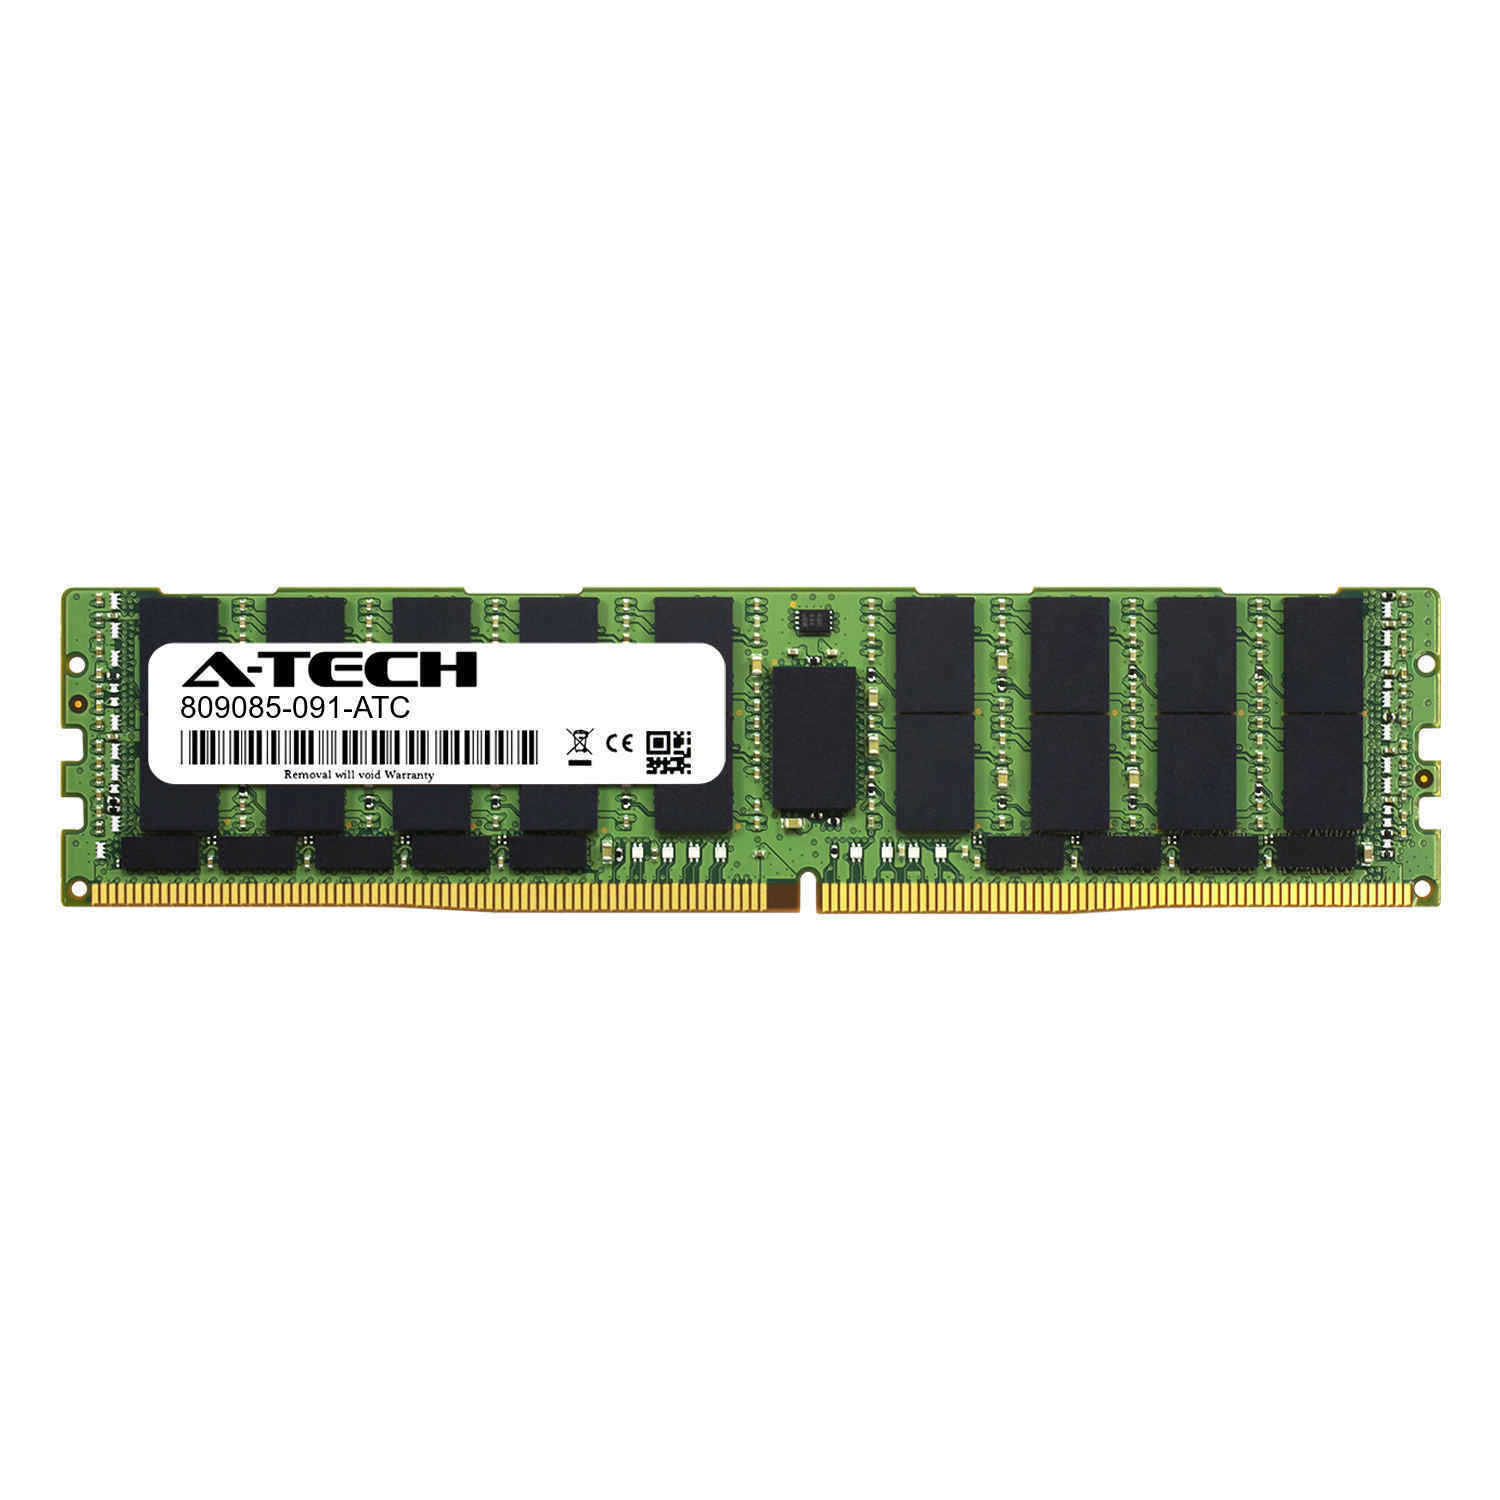 64GB DDR4 2400MHz PC4-19200L LRDIMM (HP 809085-091 Equivalent) Server Memory RAM